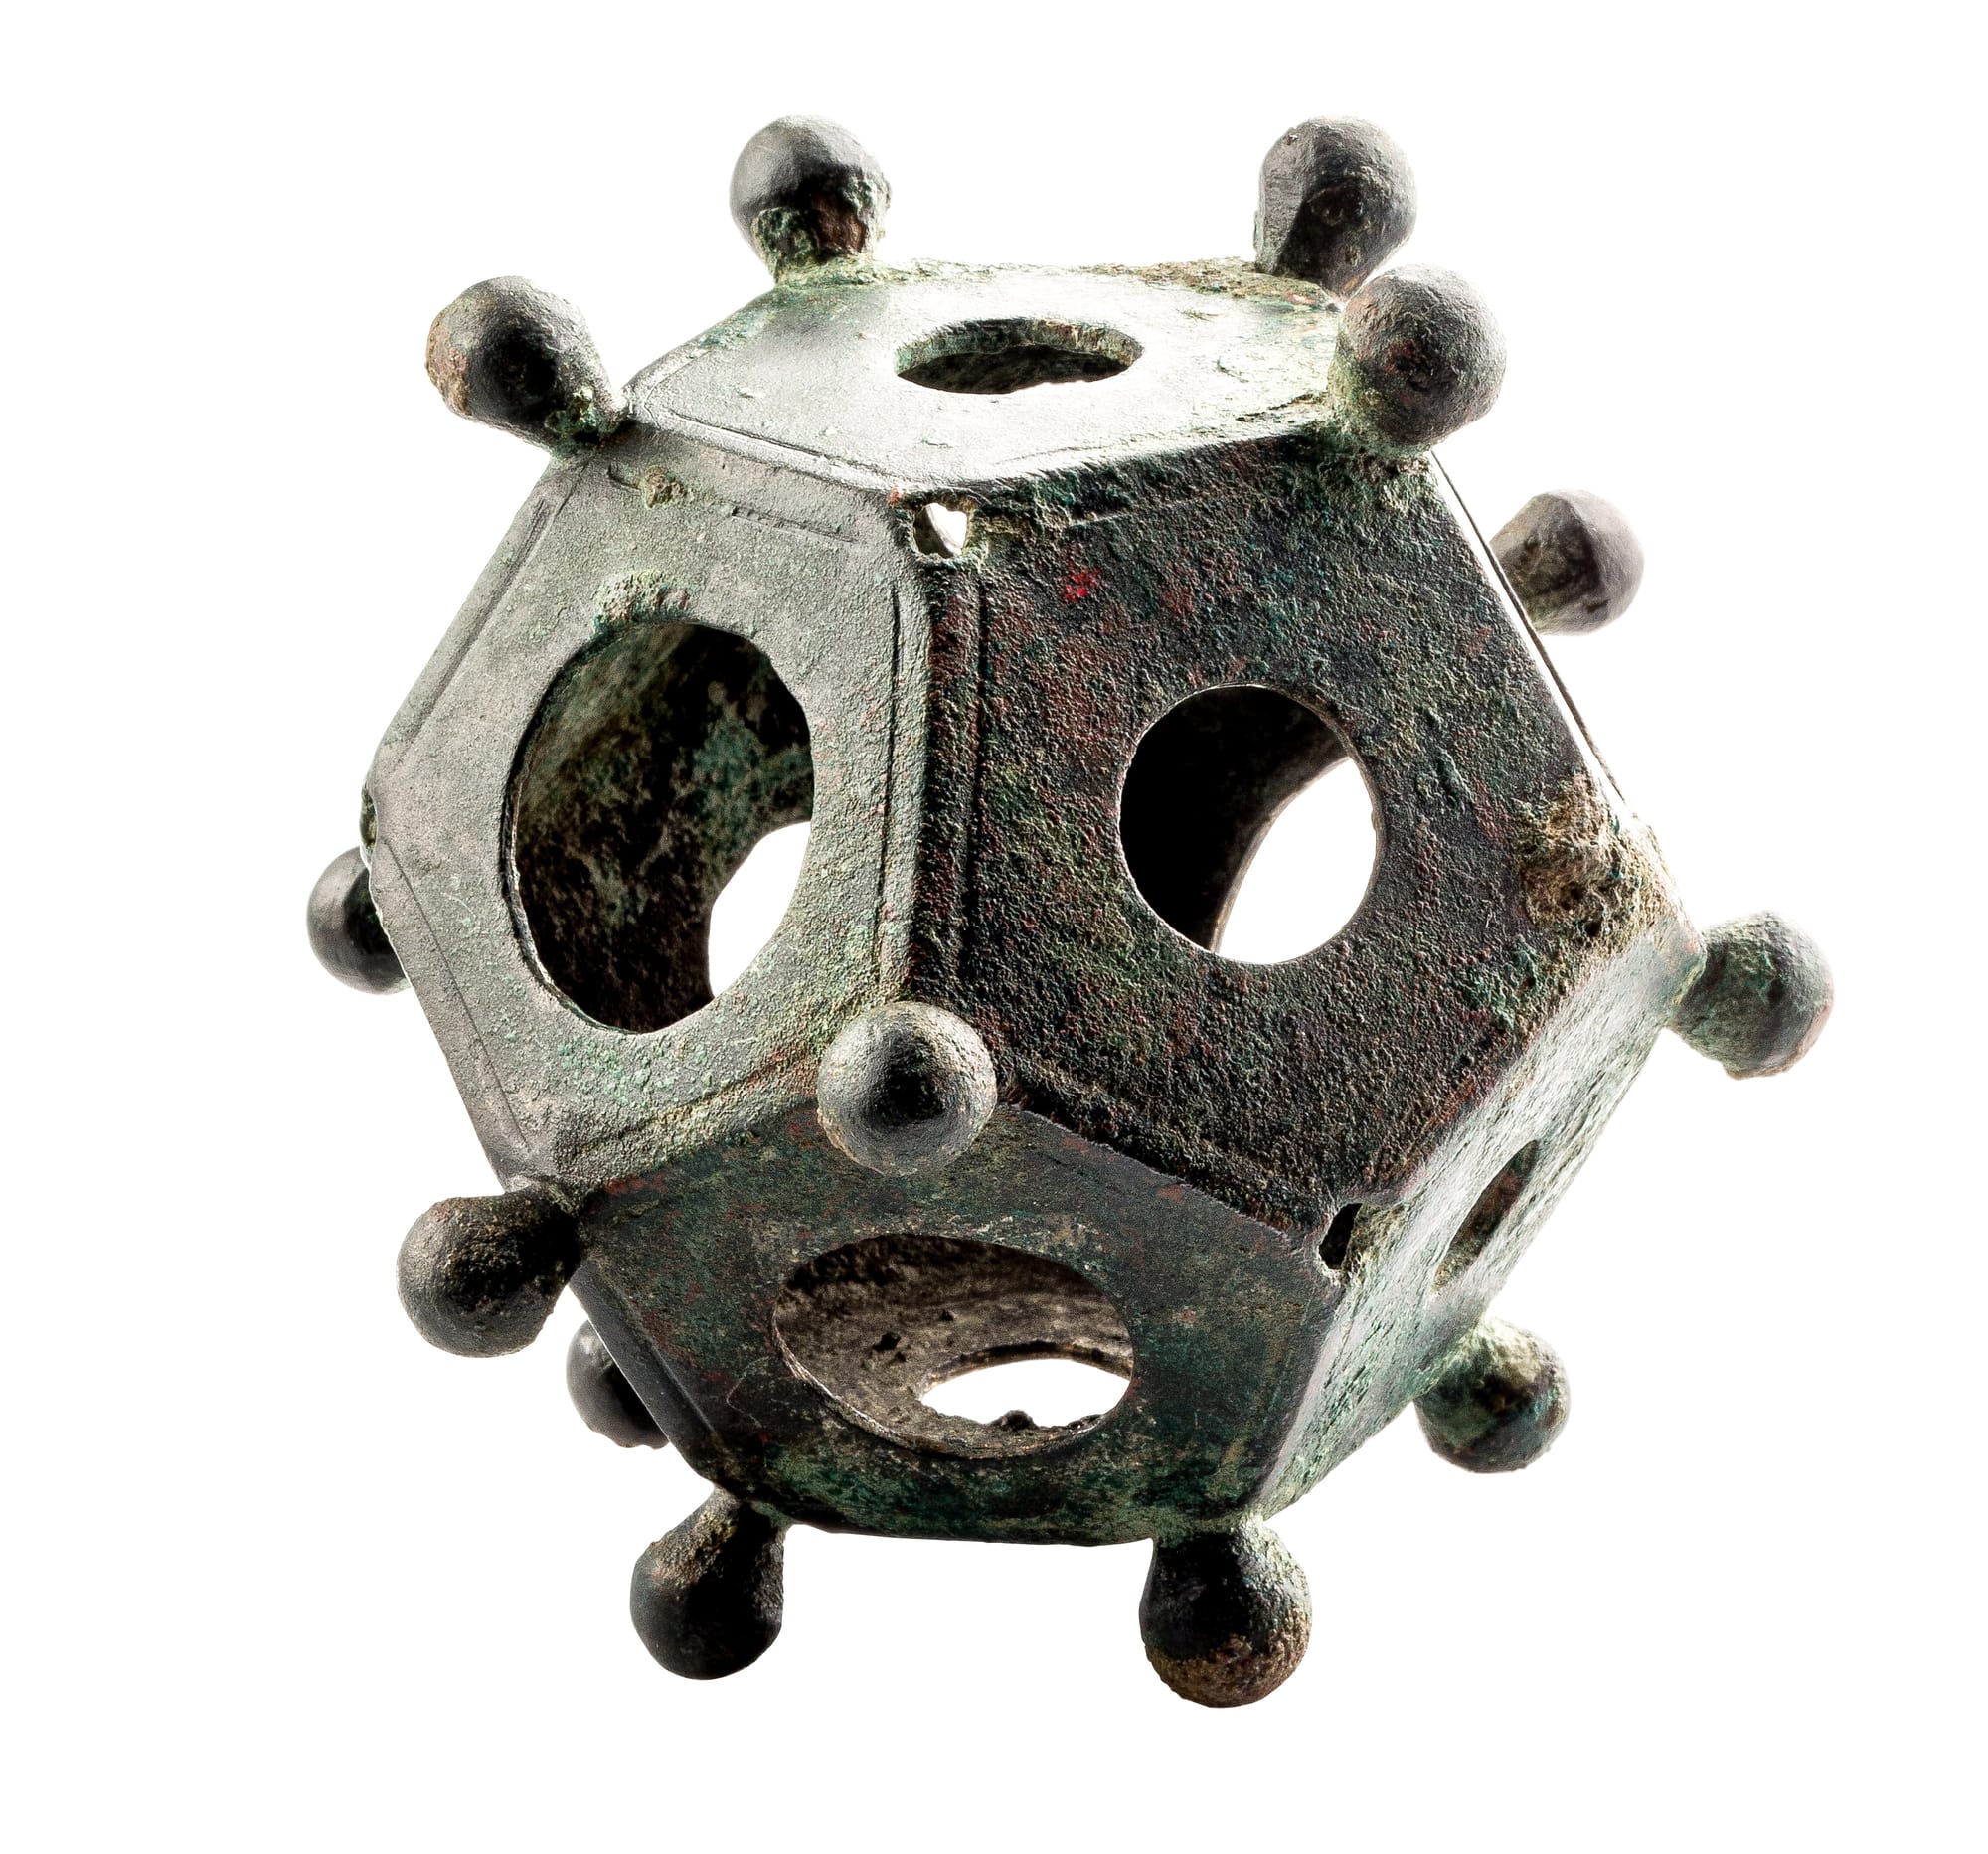 Pentagon dodecahedron in bronze